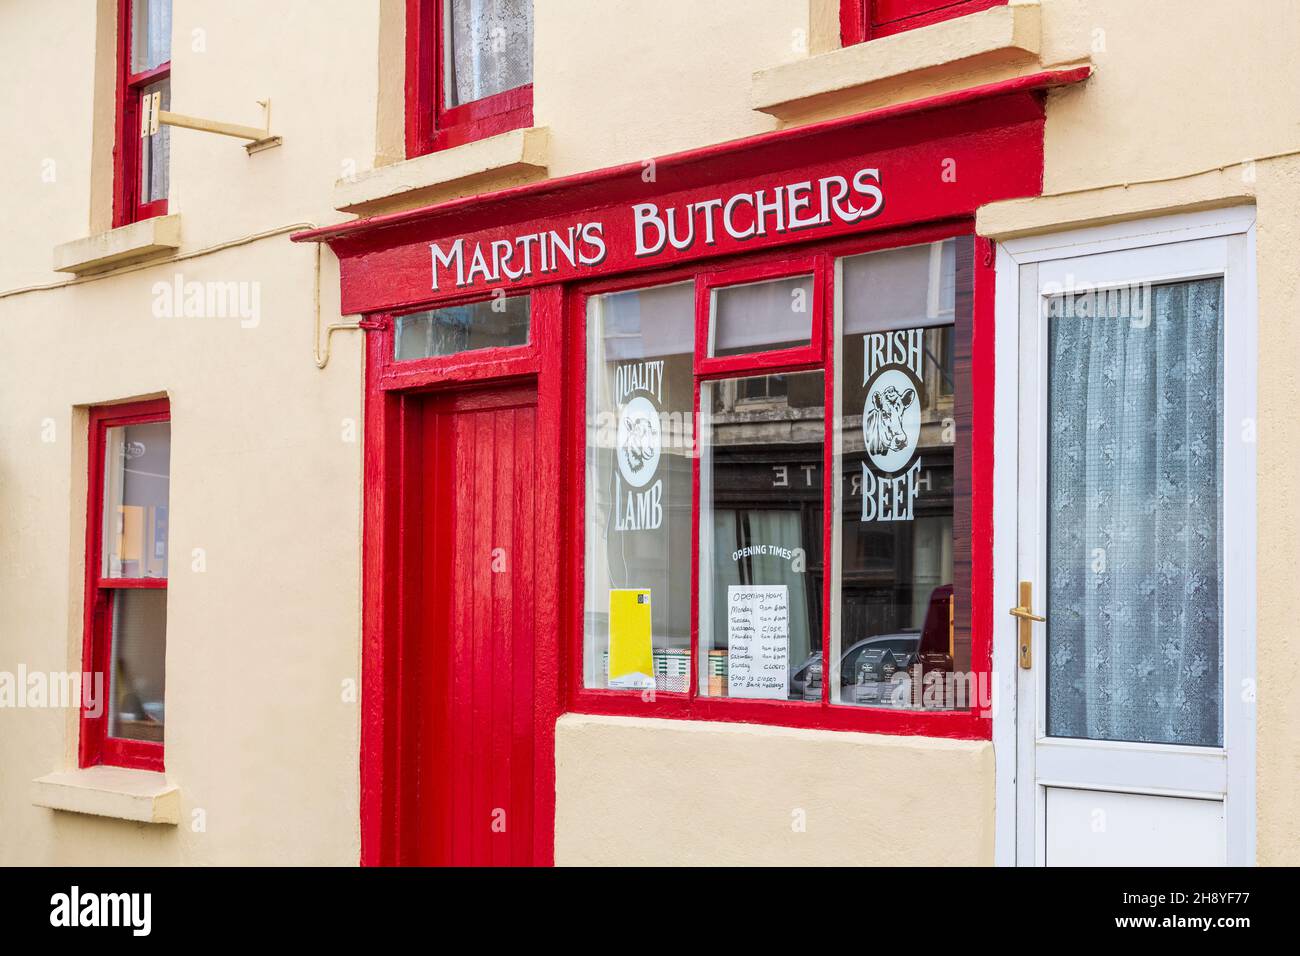 Martin's Butcher's, Goleen Village, County Cork, Ireland Stock Photo